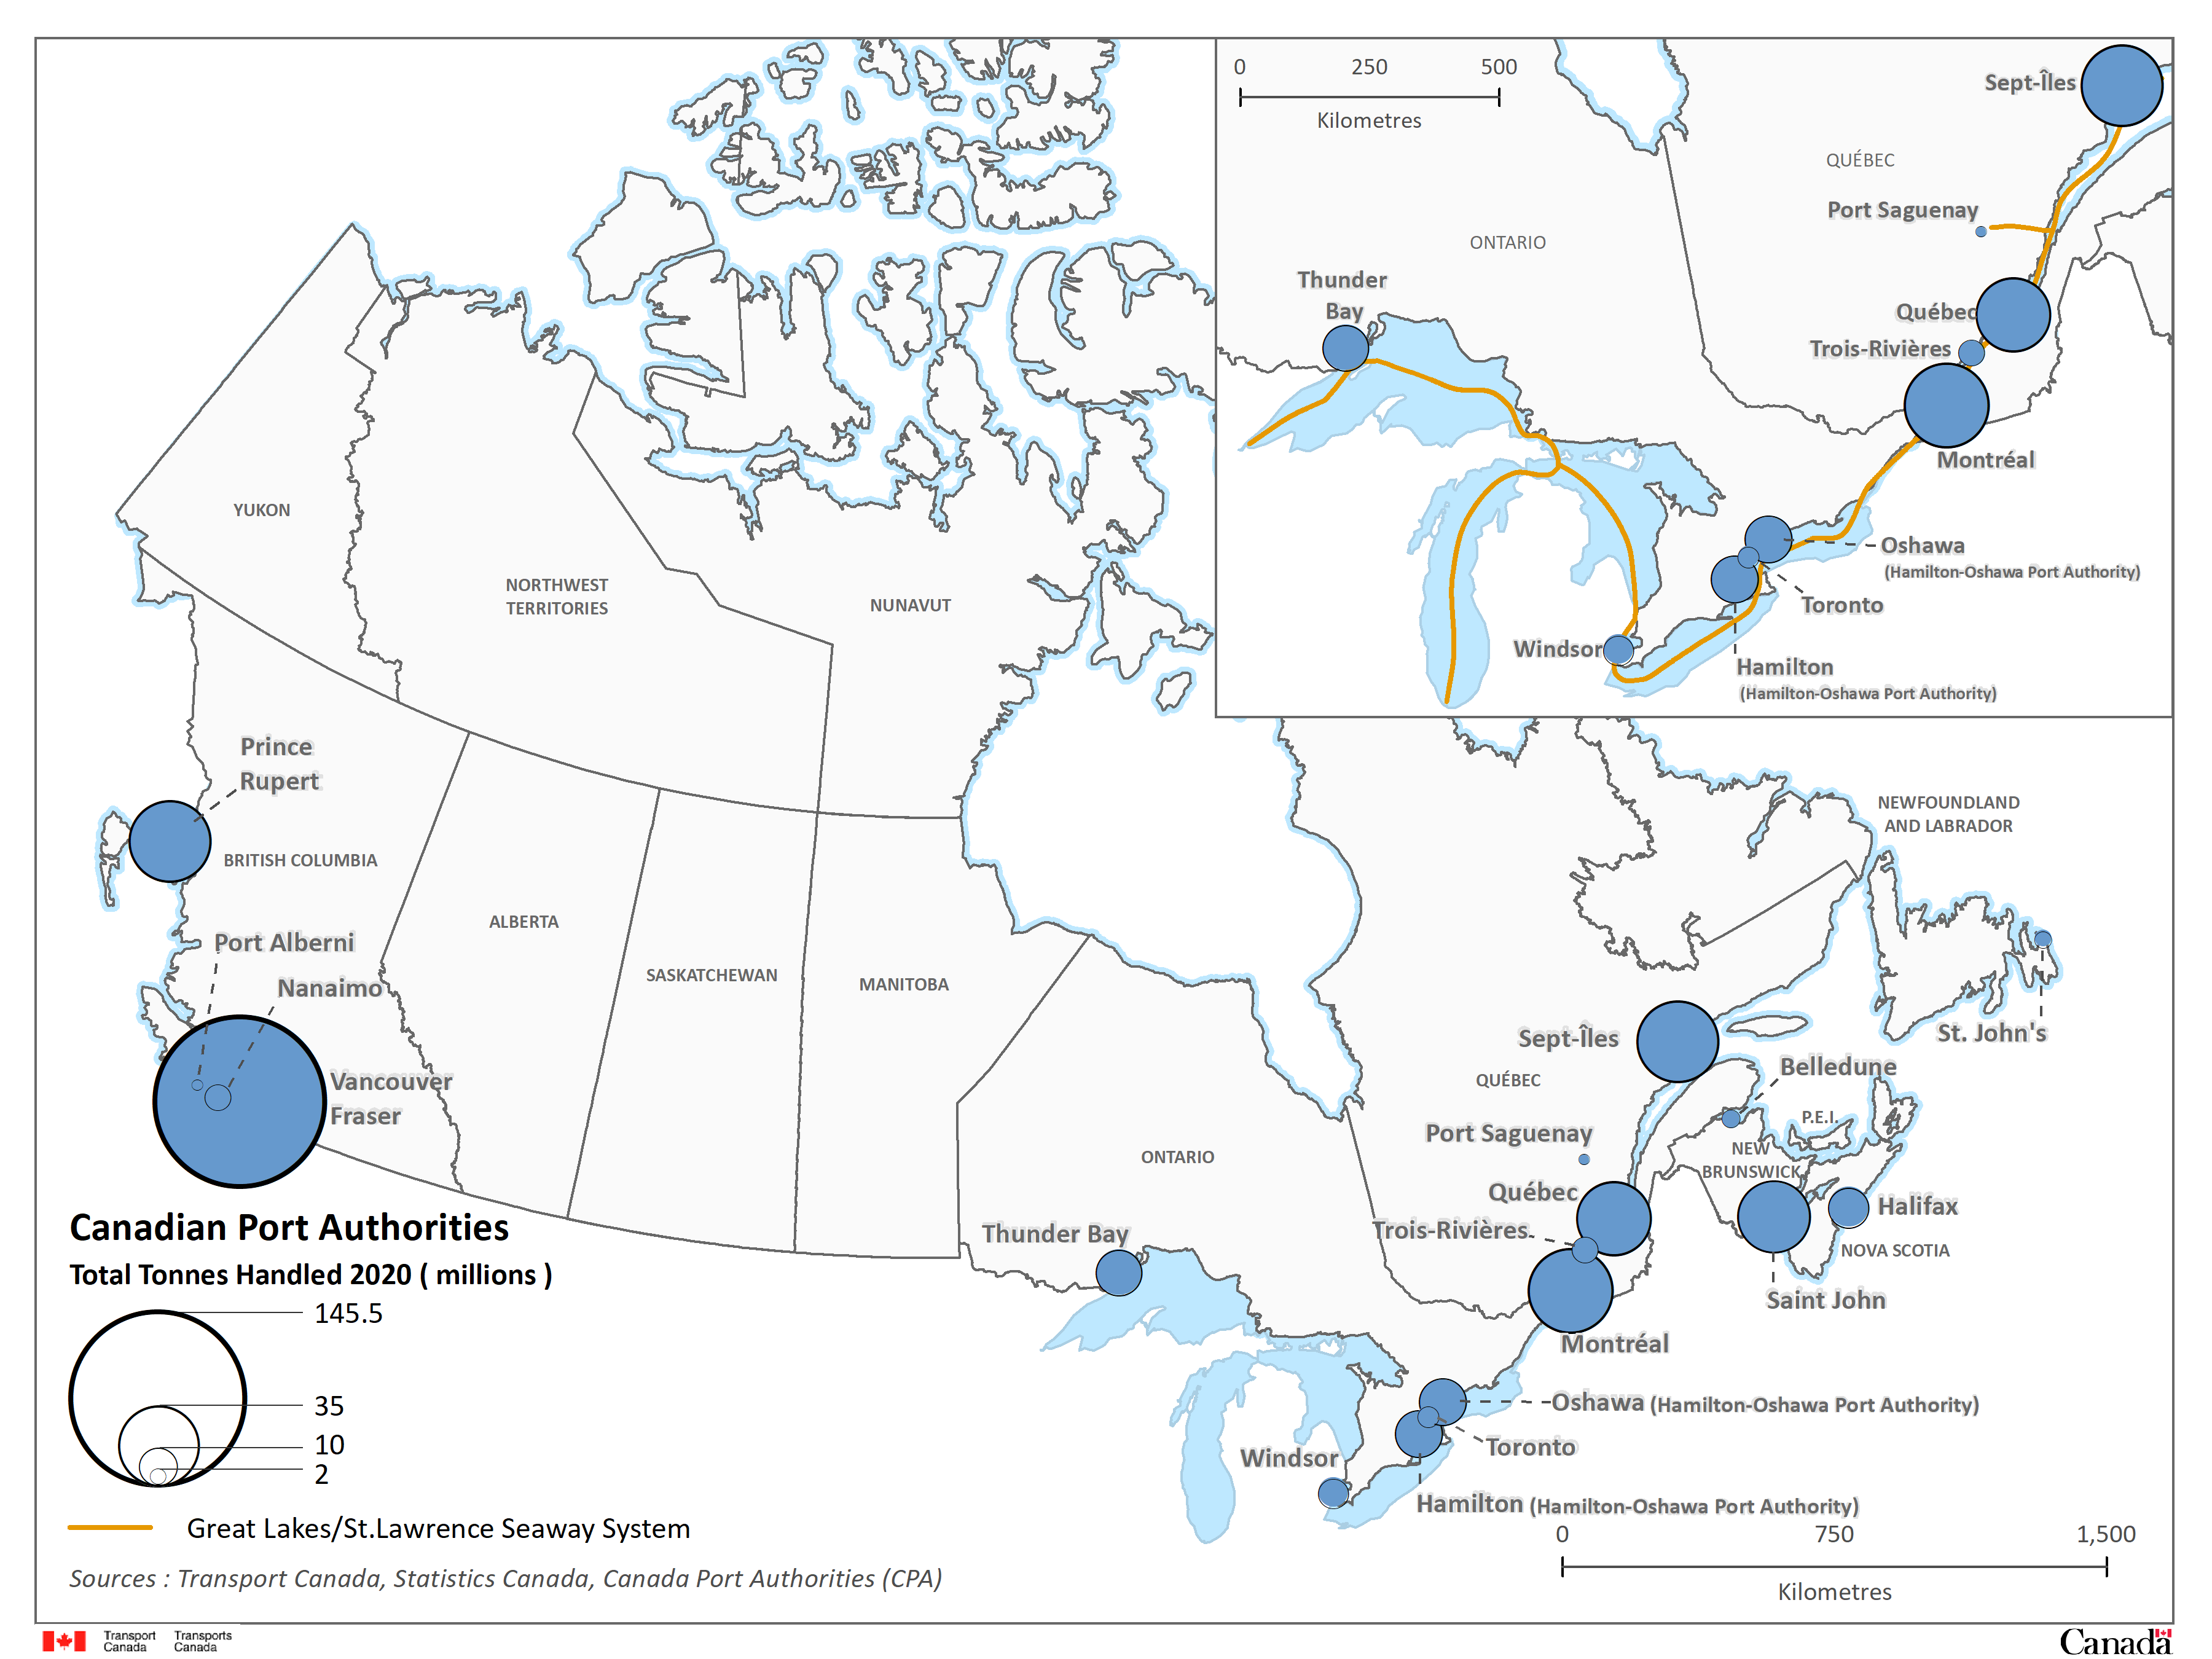 Map 5 - Canadian Port Authorities